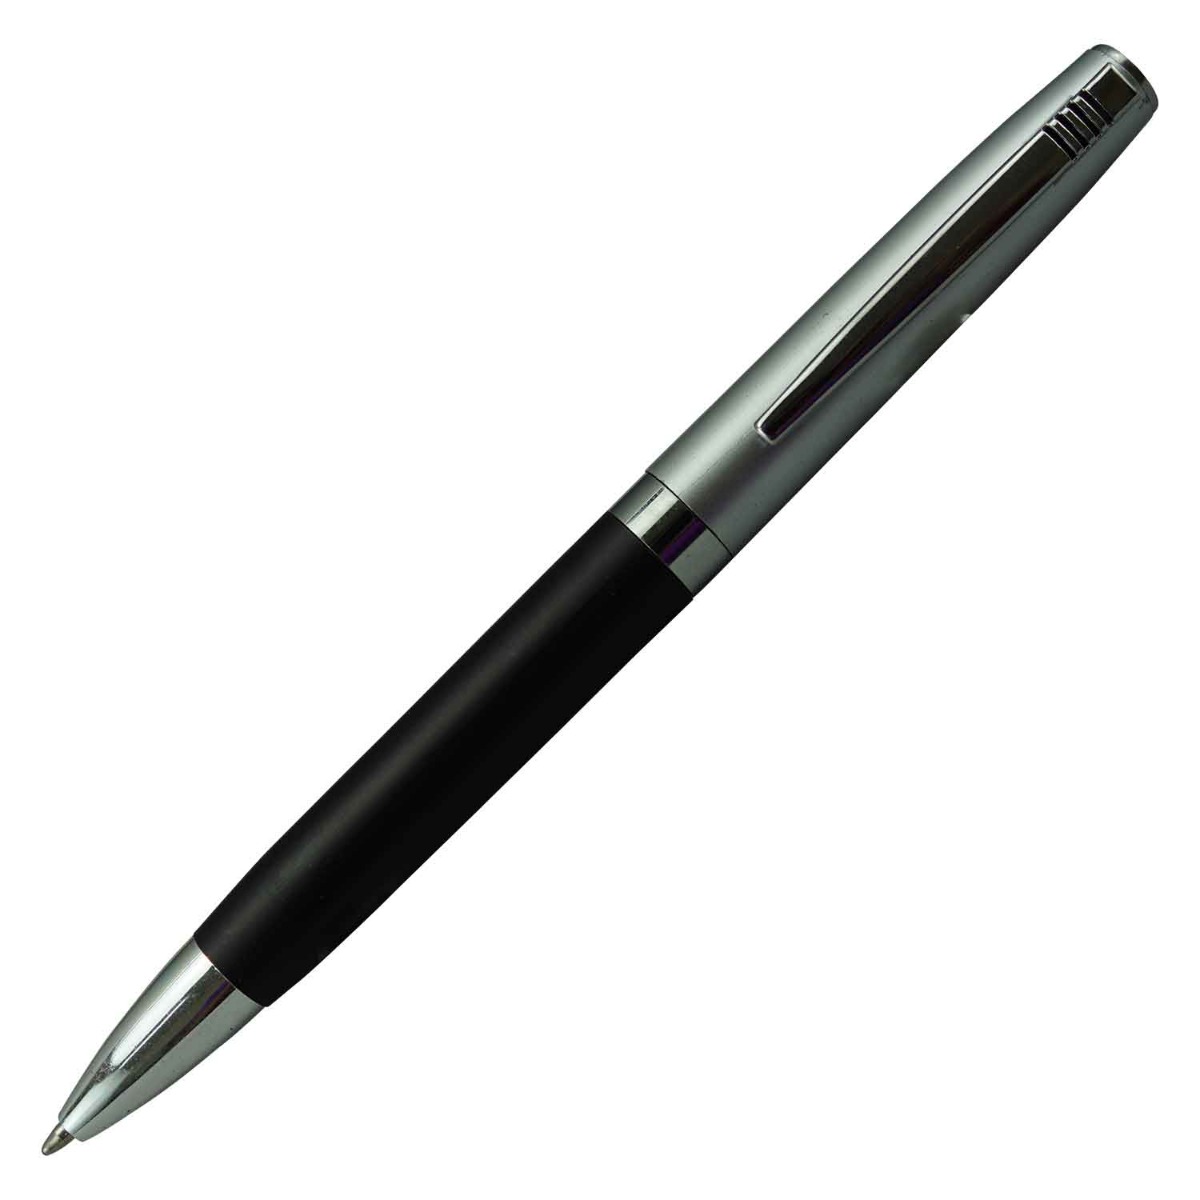 Penhouse Model:16052  Black Color Body With Silver Cap Model Twist Type  Fine Tip Ball Pen